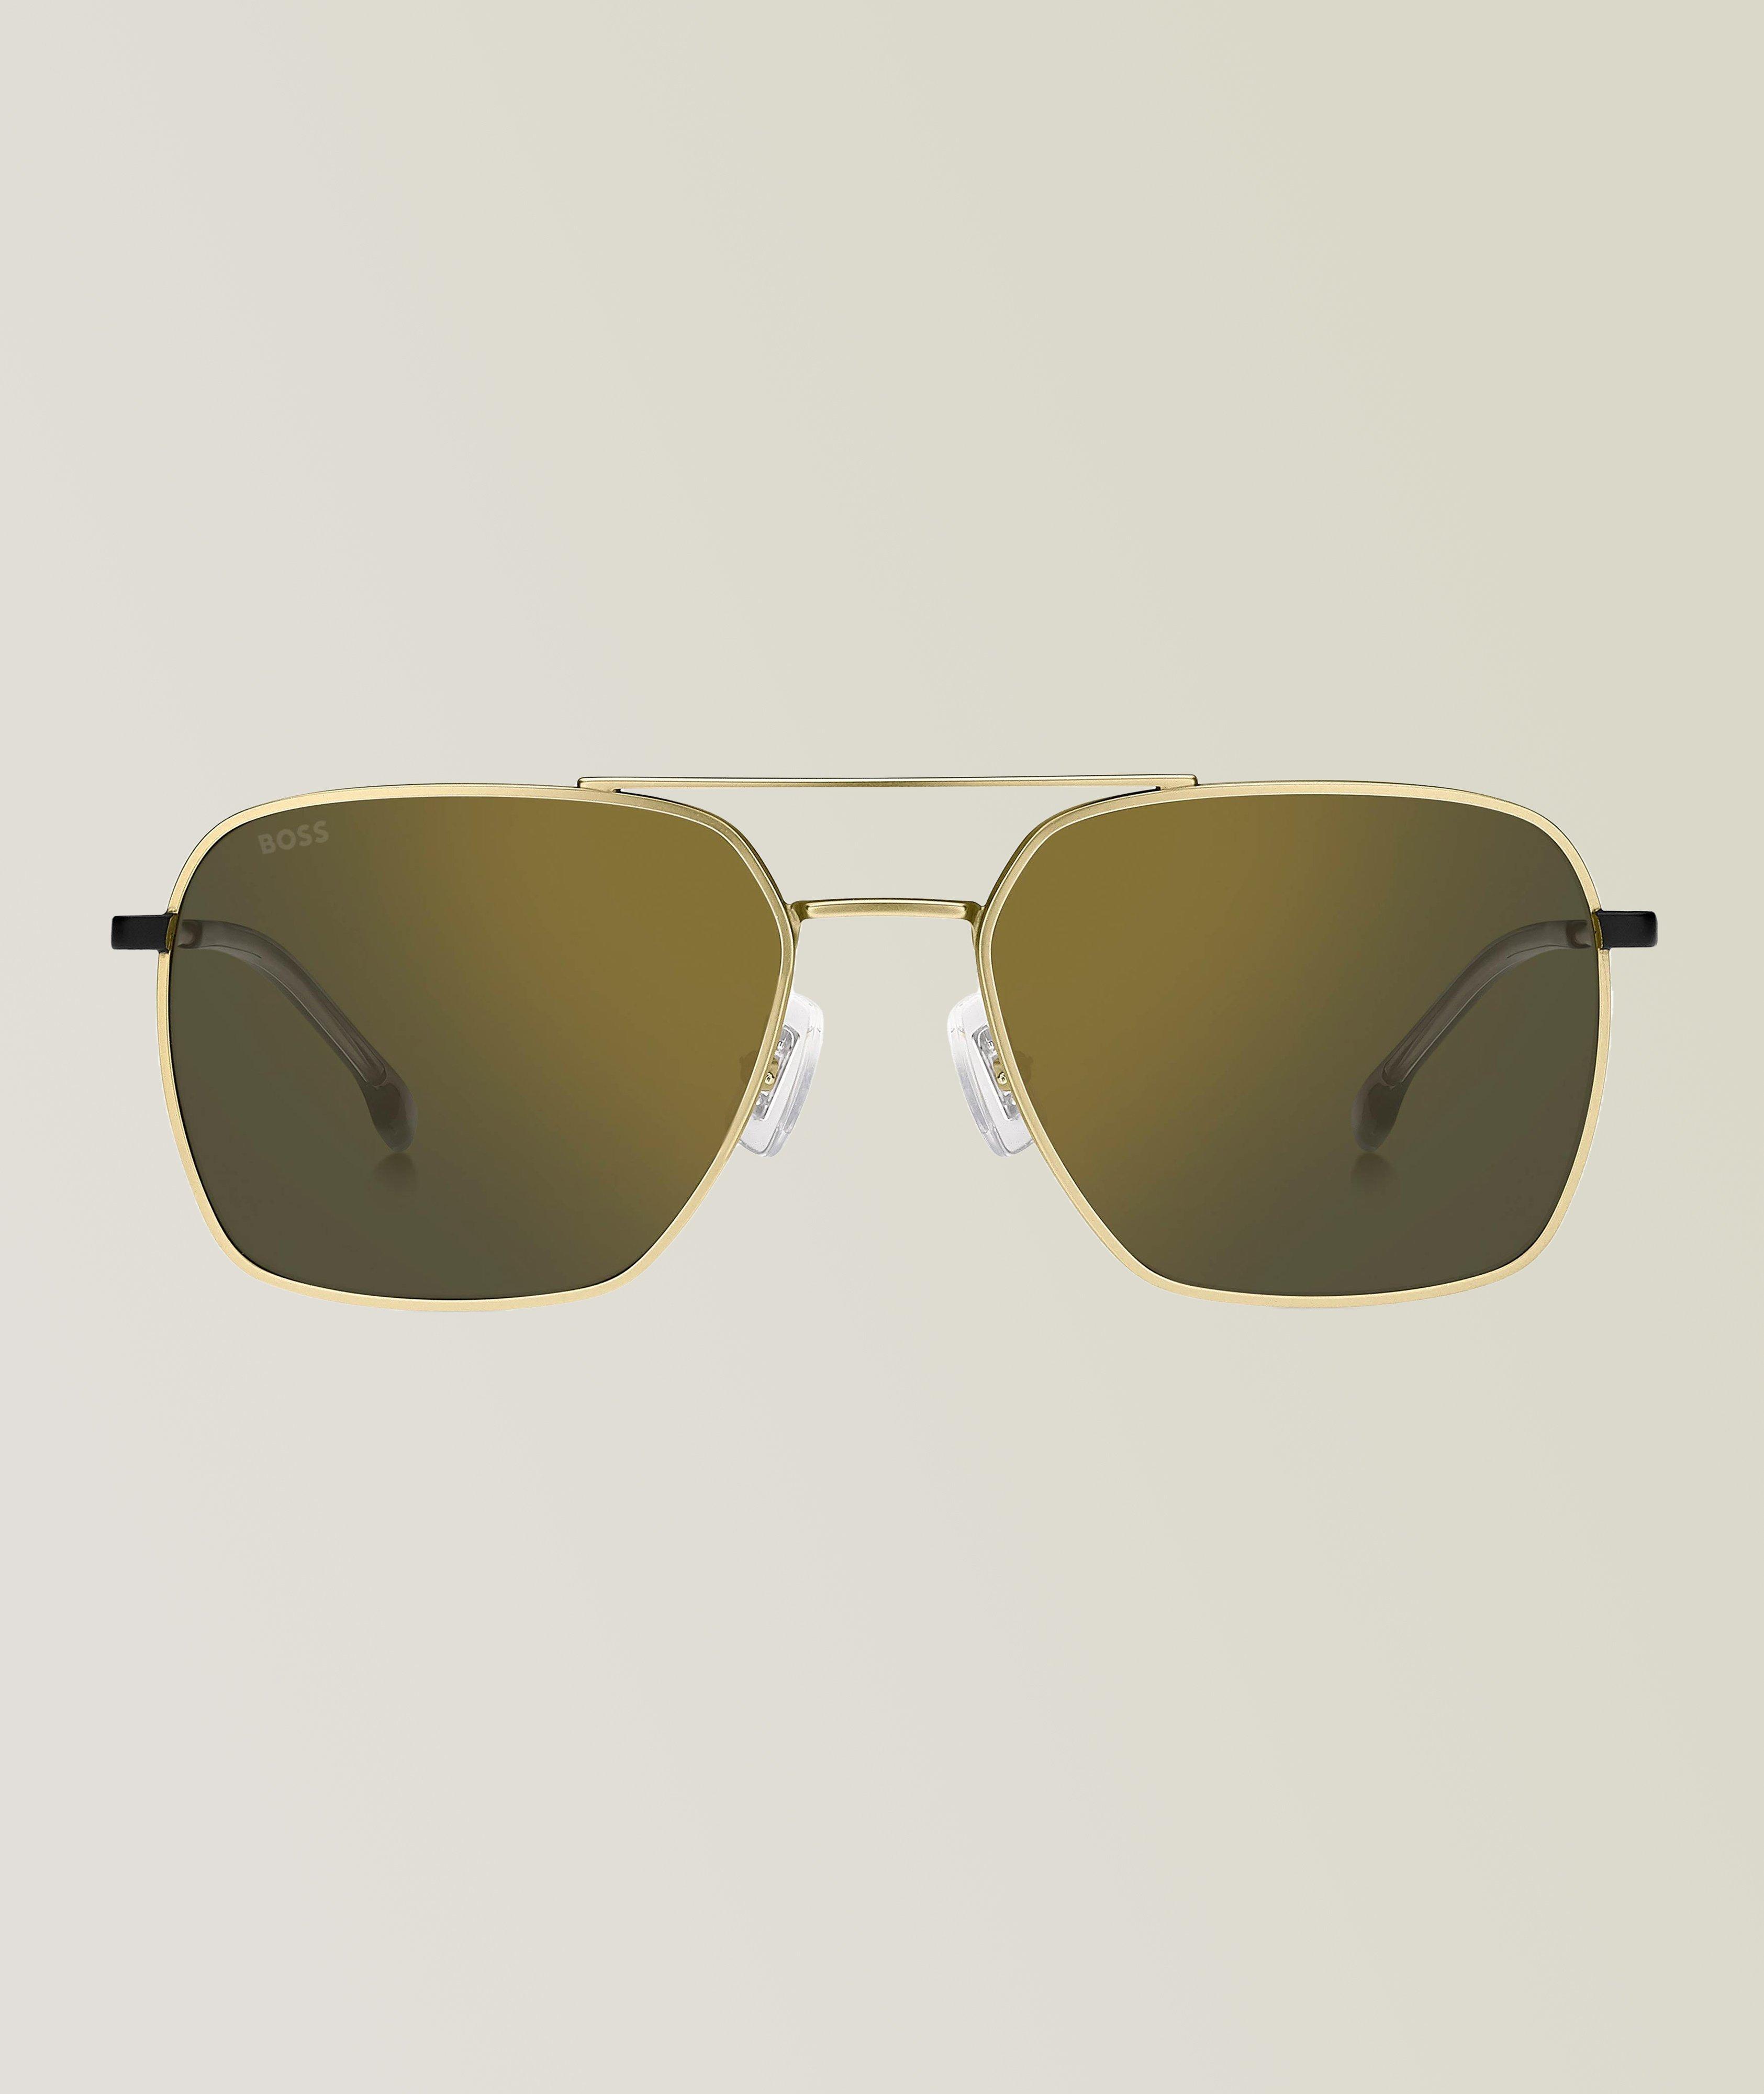 Mirrored Lens Square Sunglasses image 0